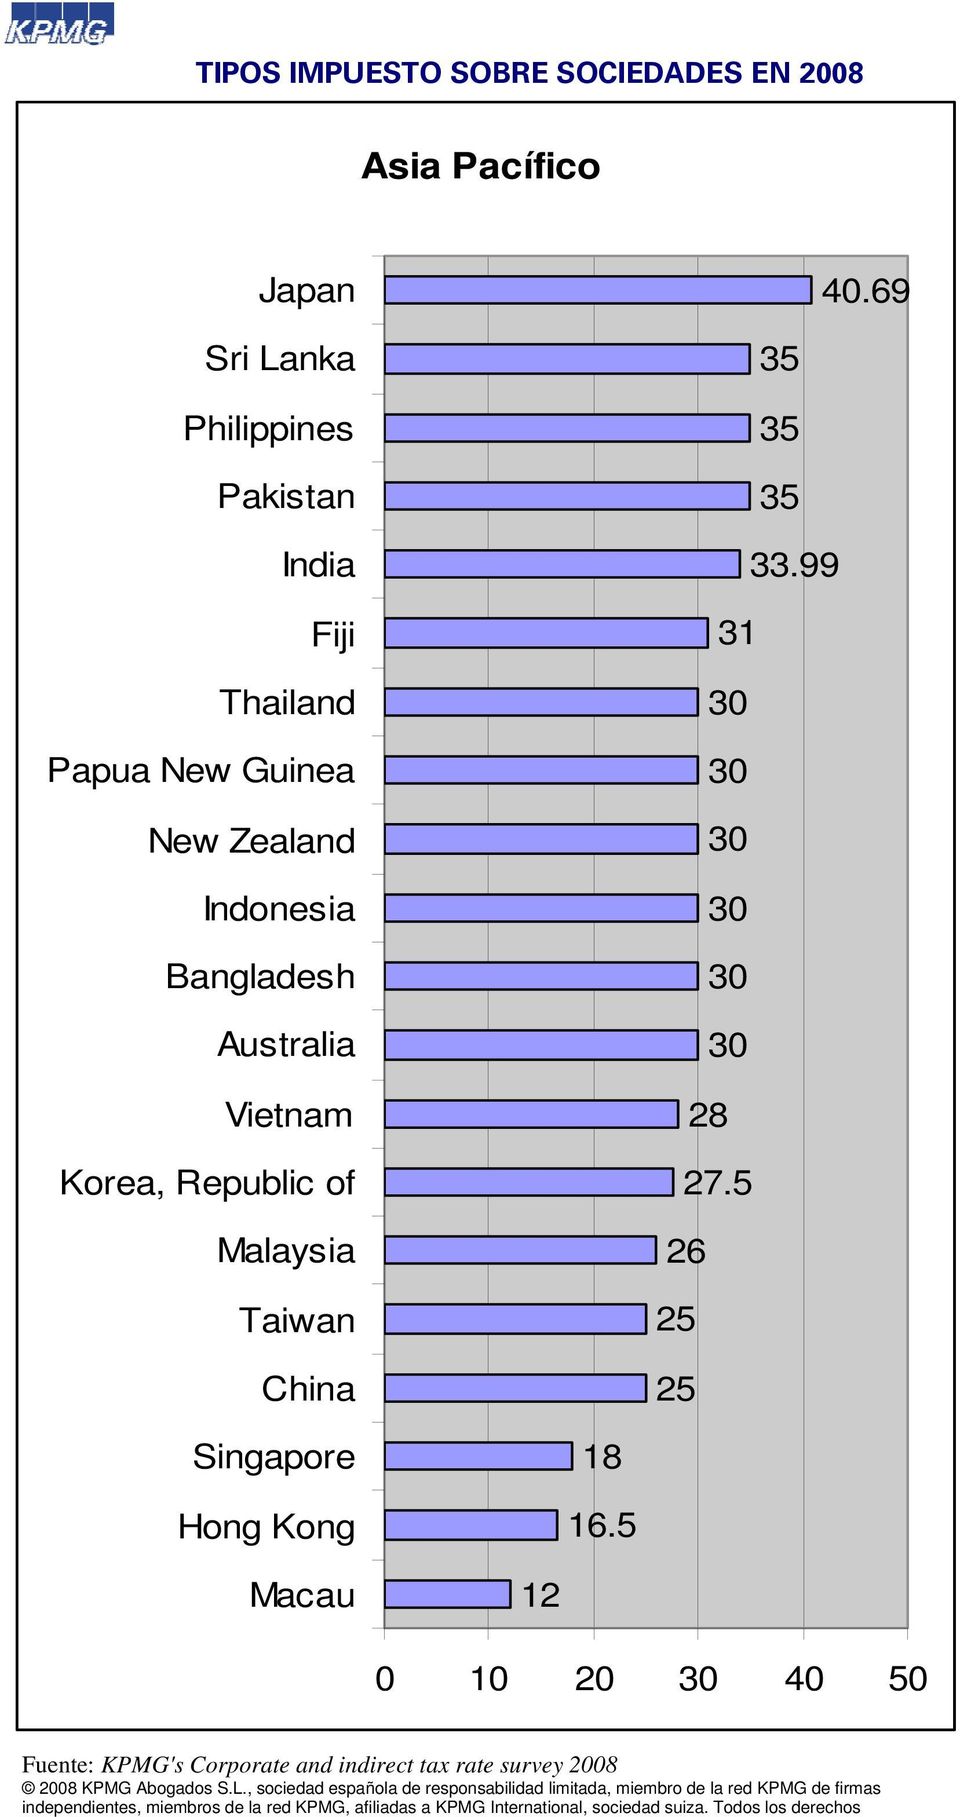 Australia Vietnam Korea, Republic of Malaysia Taiwan China 3 3 3 33.99 31 27. 26 Singapore Hong Kong.